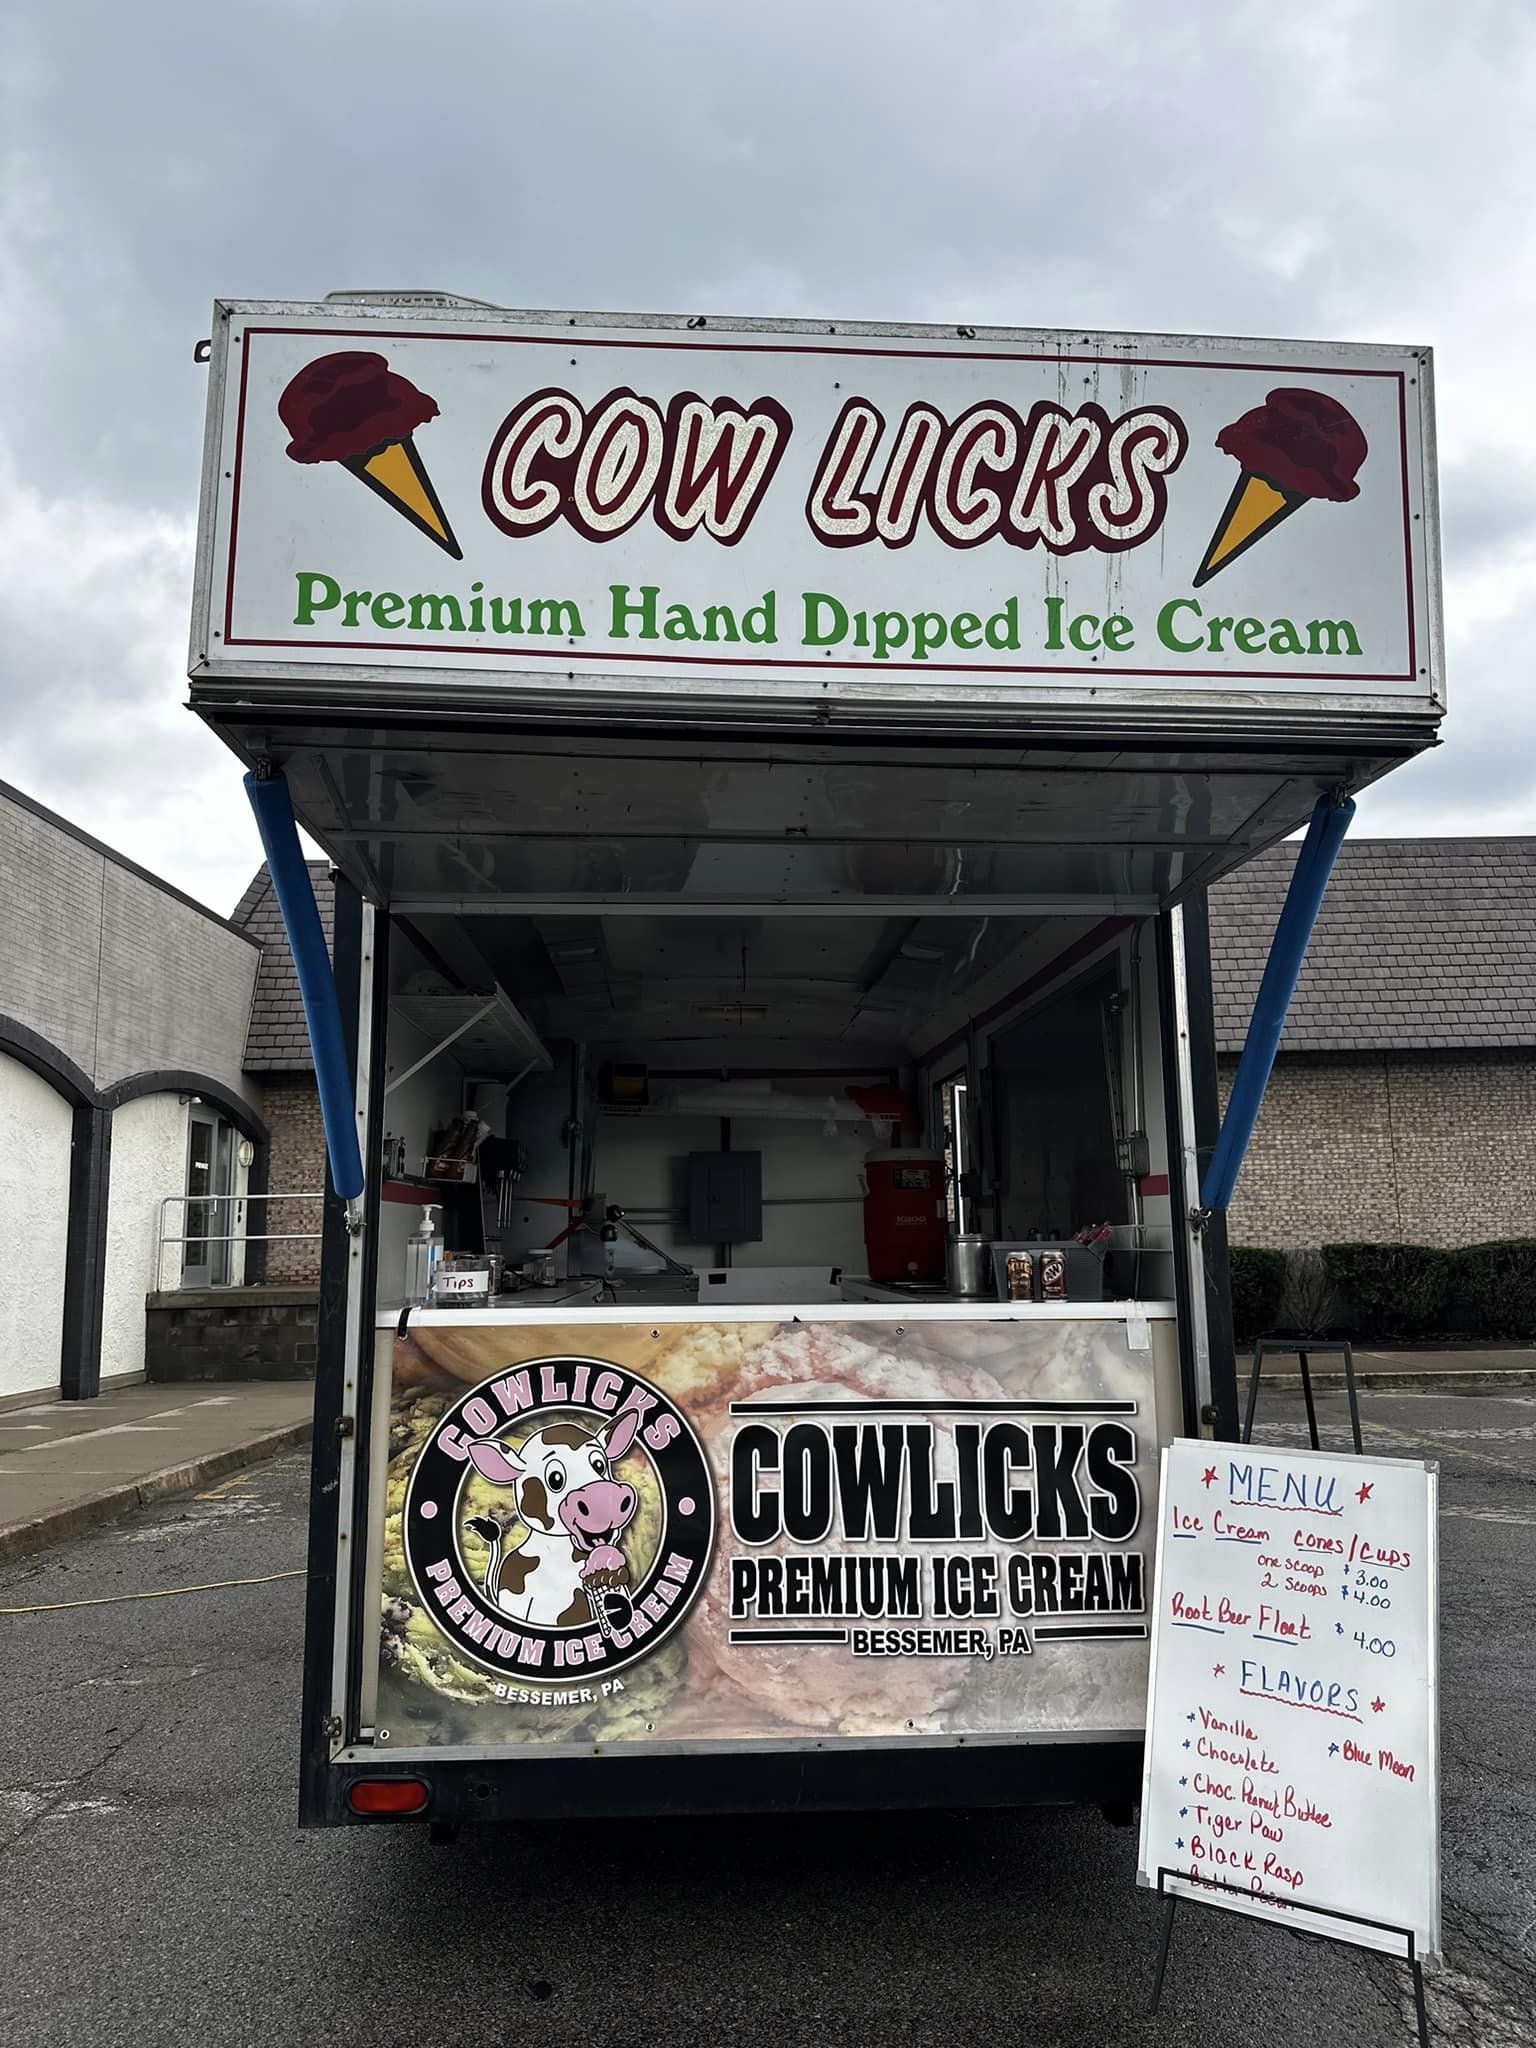 Cow licks